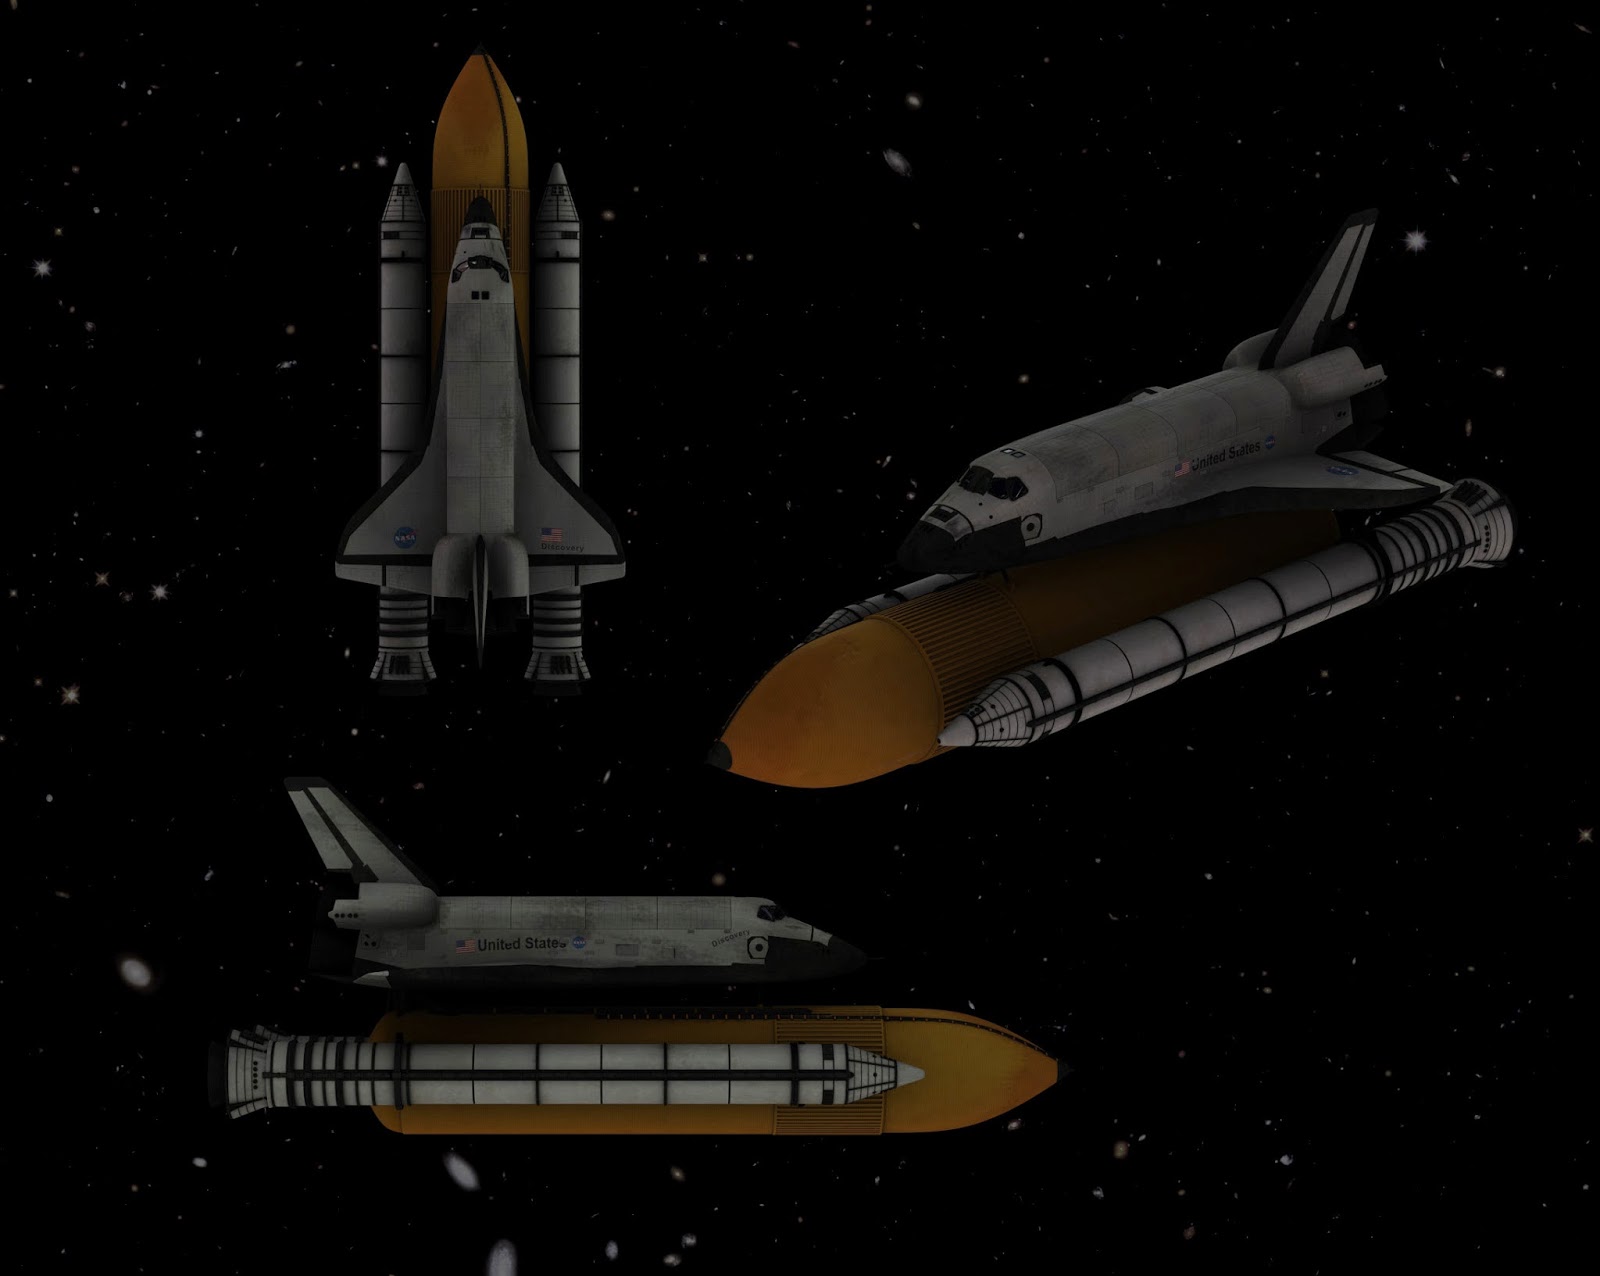 Discovery_Shuttle.jpg